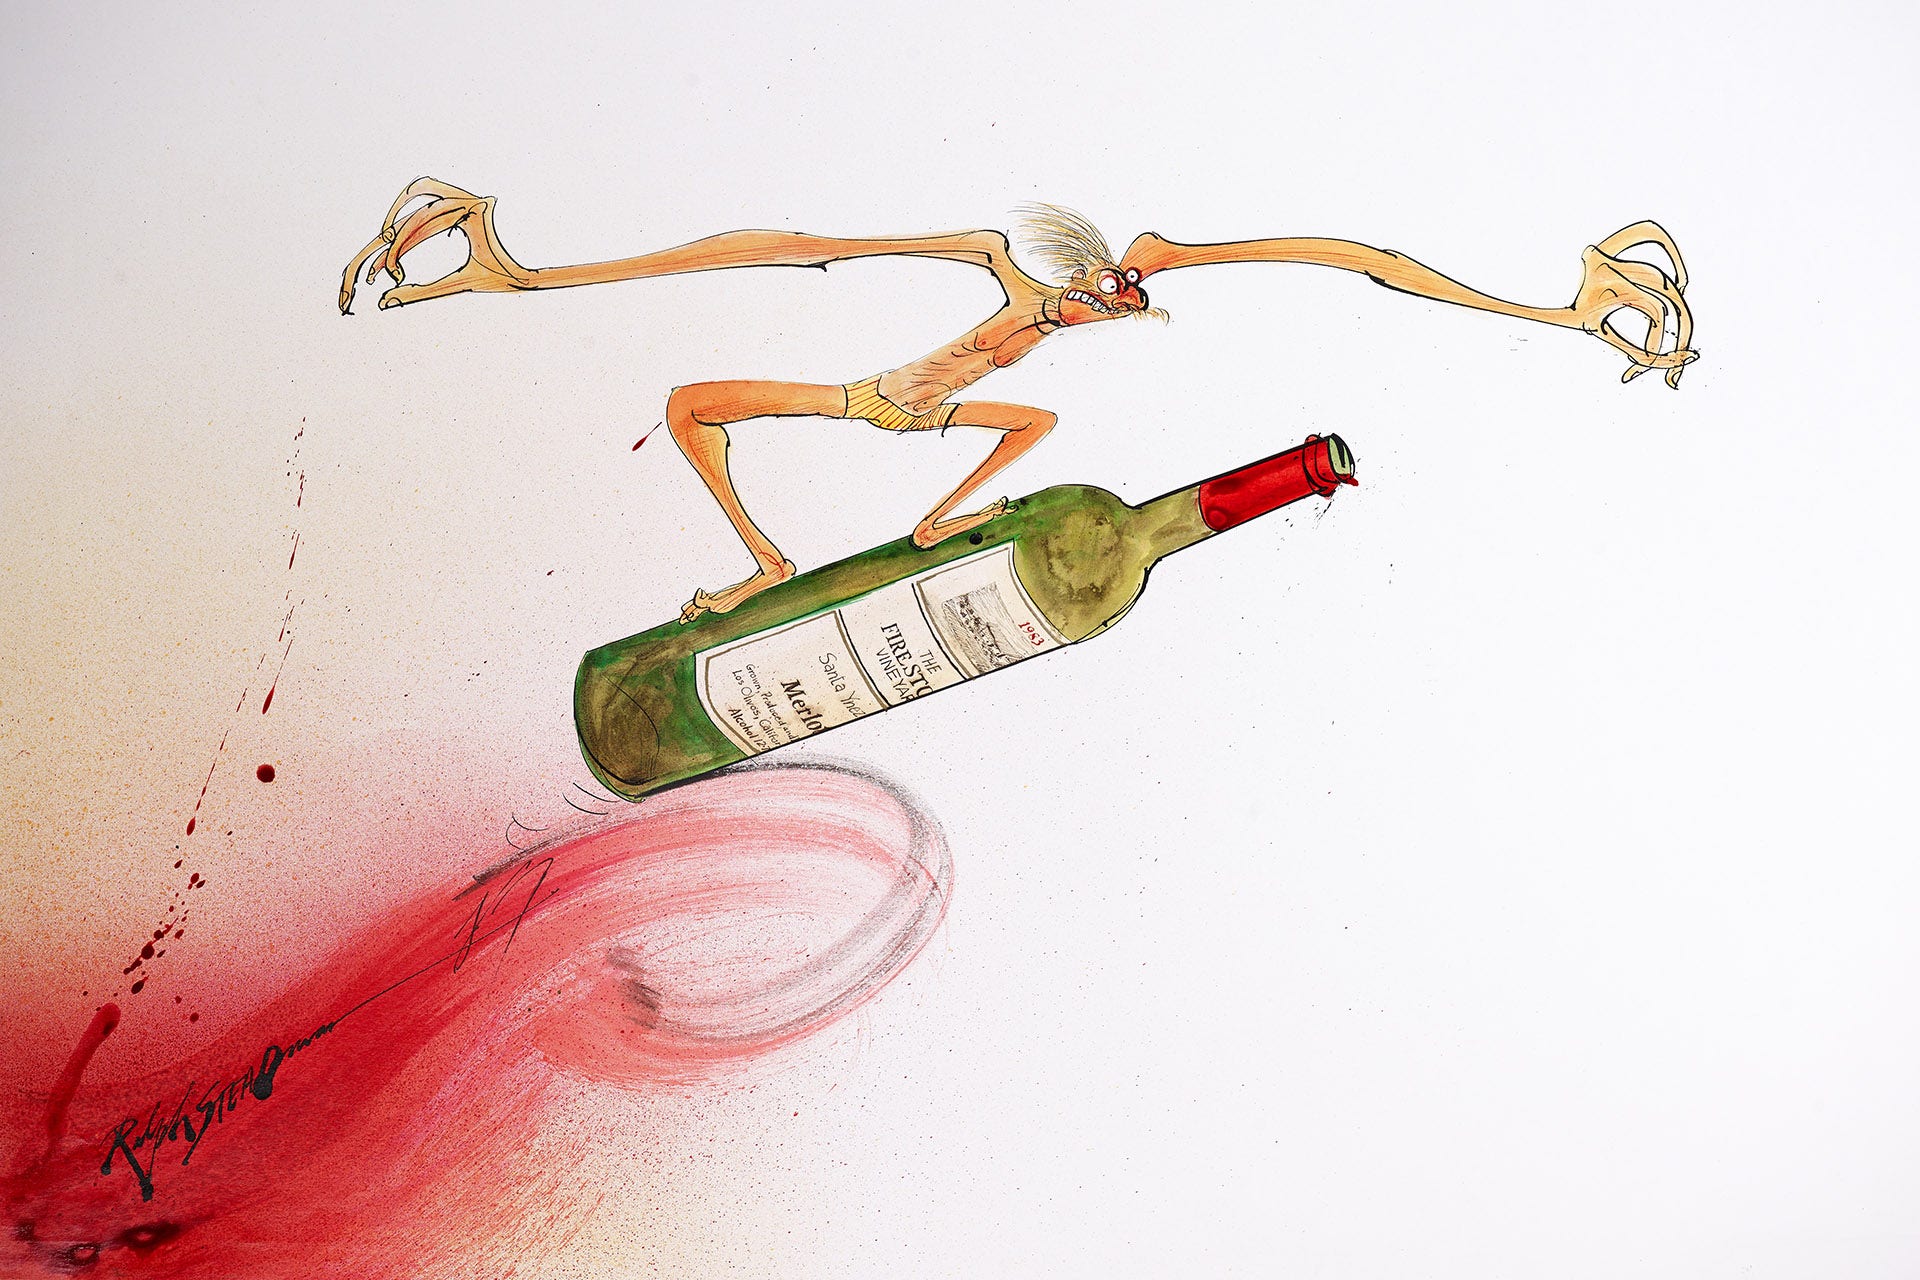 Illustration of man surfing on wine bottle by Ralph Steadman